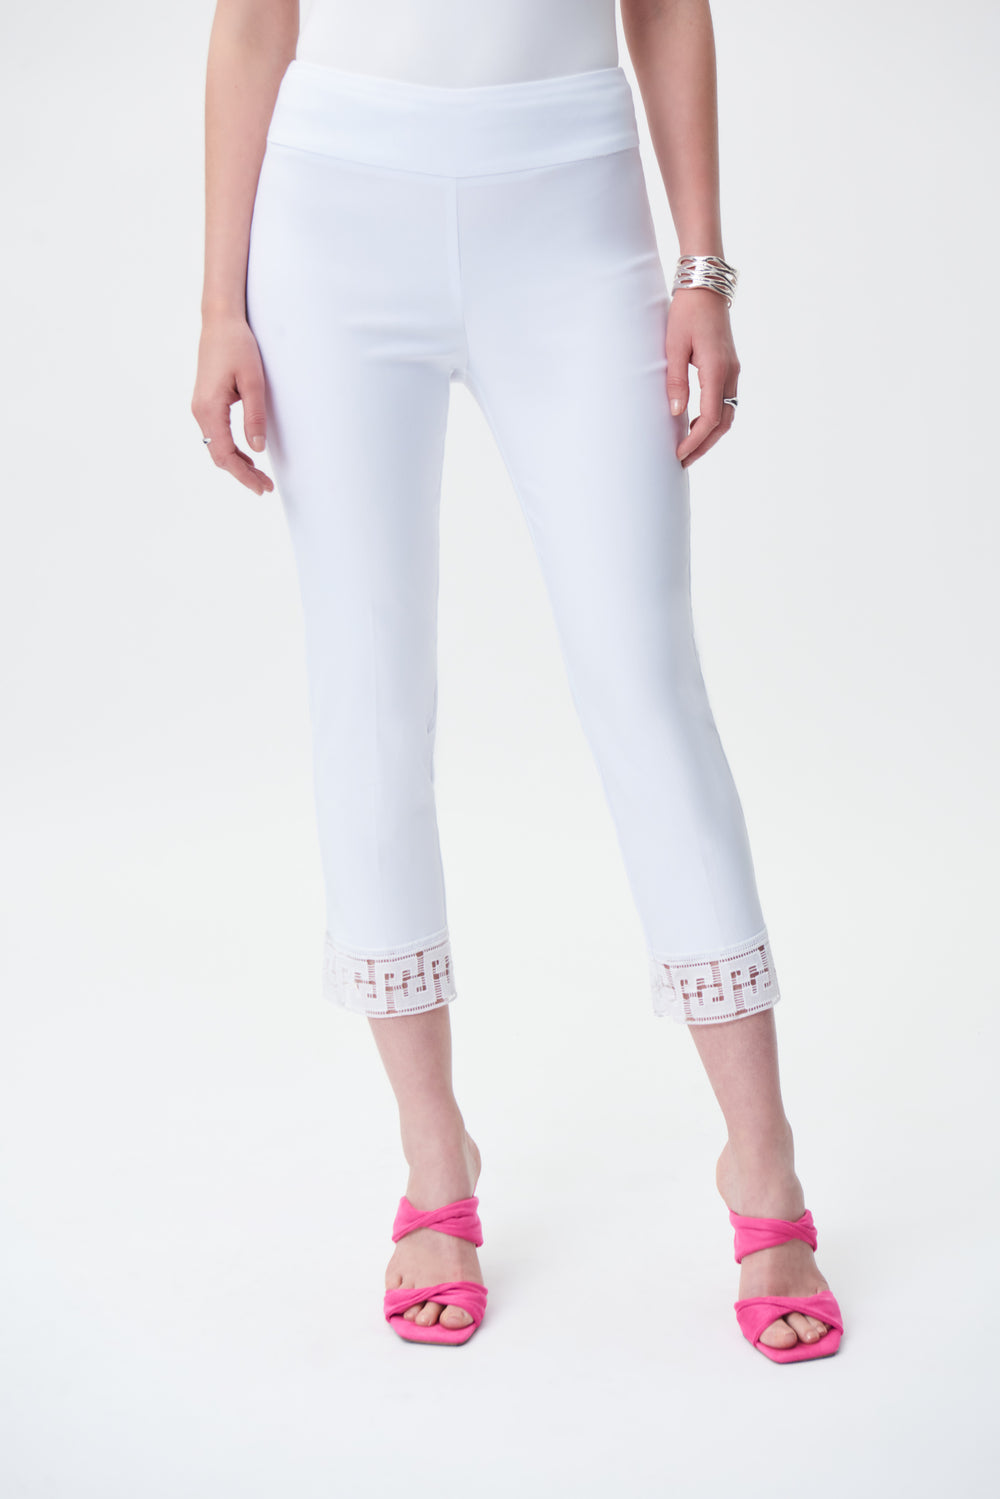 Joseph Ribkoff Spring 2023 women's casual capri pants - white front